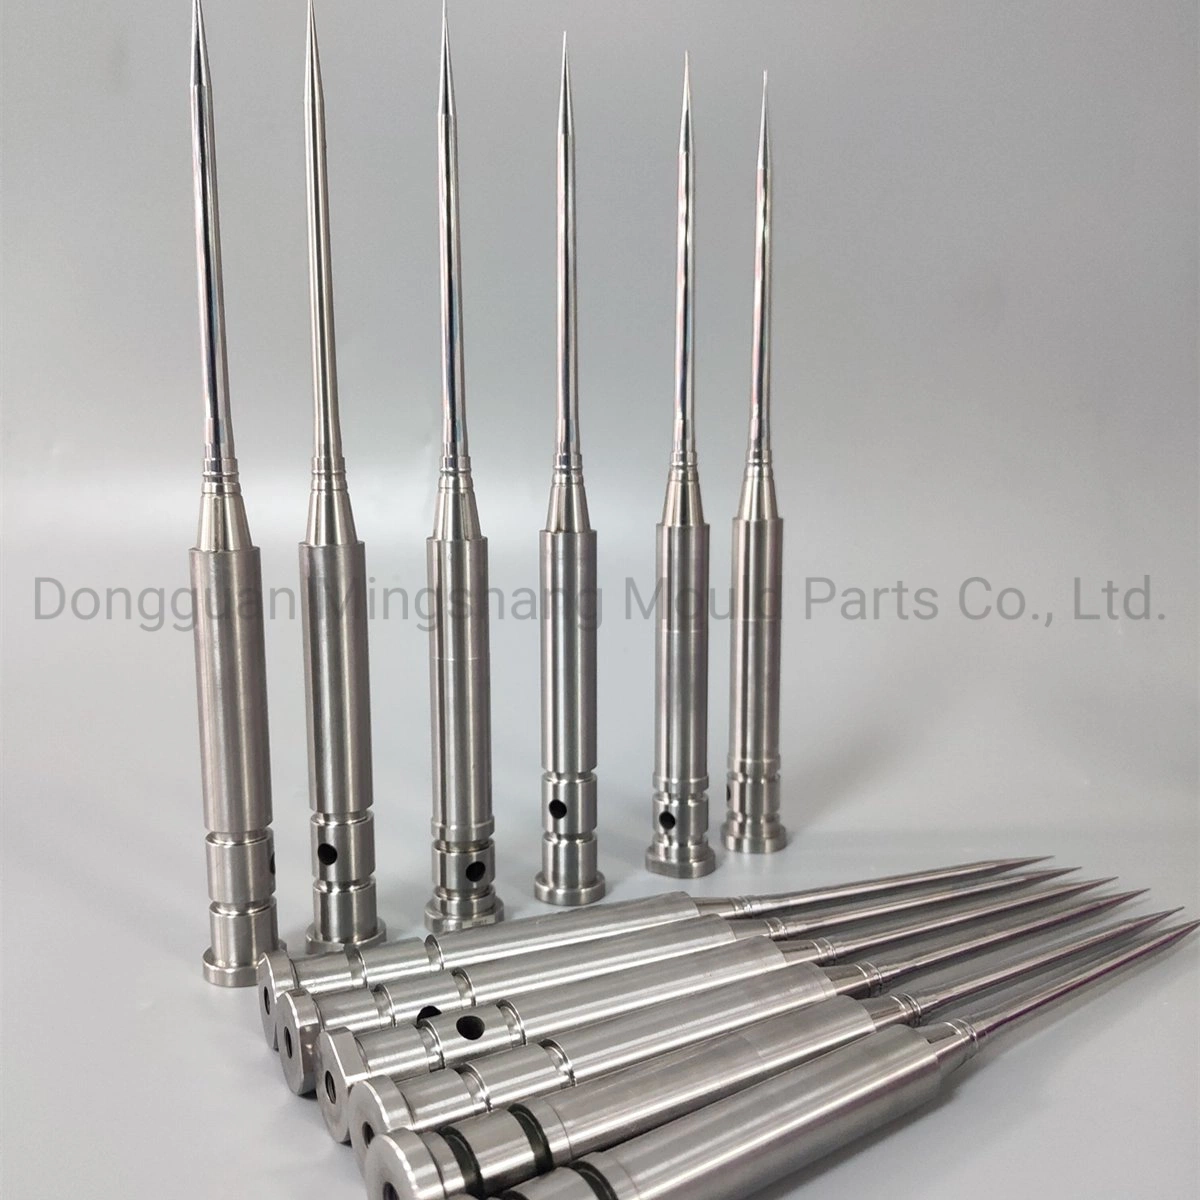 High Precision SKD61 العمل الساخن Die Steel Core Pins مع نيتركس لمولد حقن البلاستيك الطبي